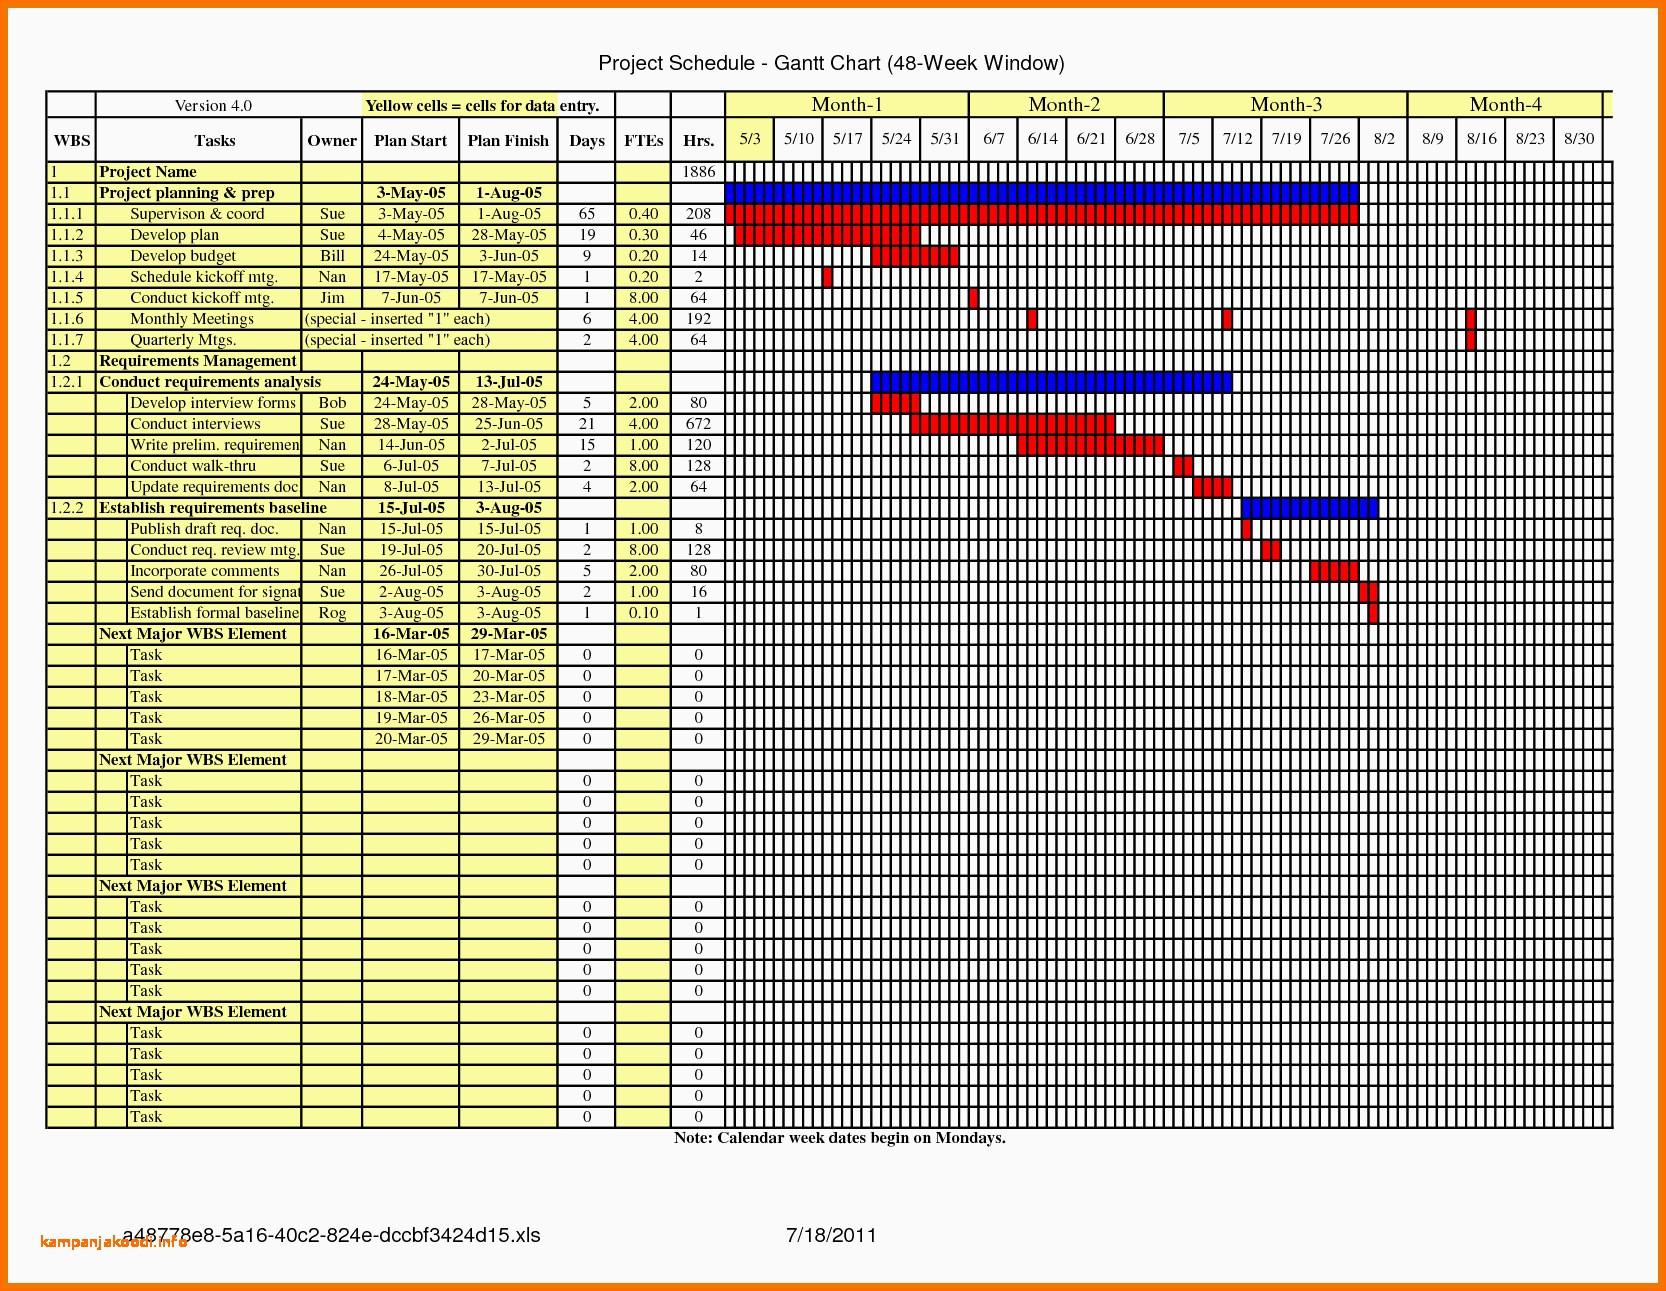 Project Resource Allocation Spreadsheet Template in Gantt Chart